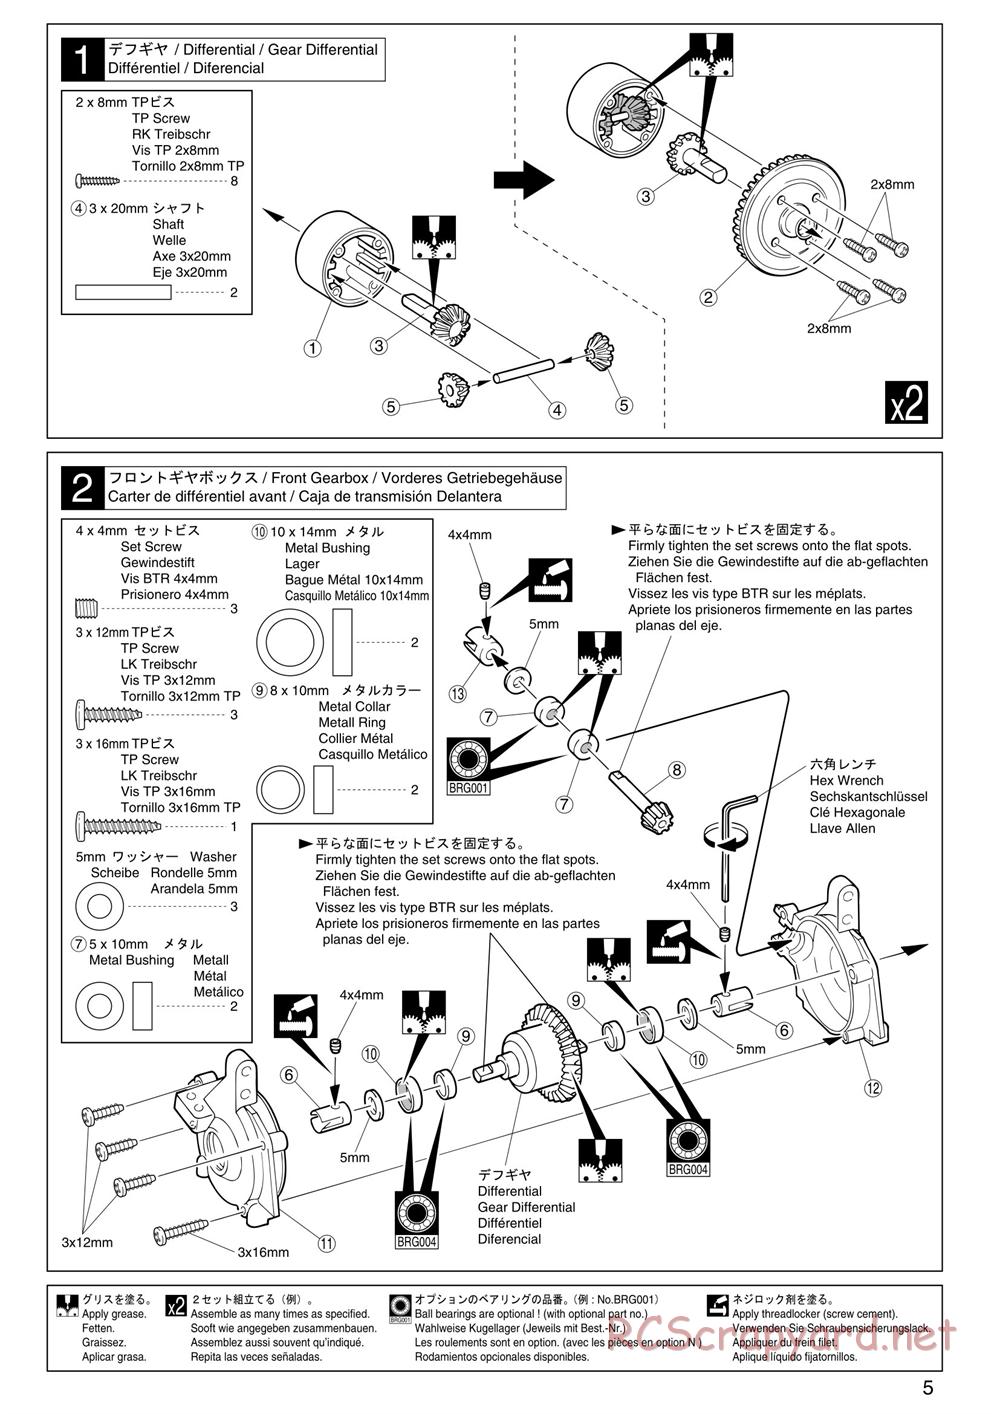 Kyosho - PureTen EP Alpha 3 - Manual - Page 5